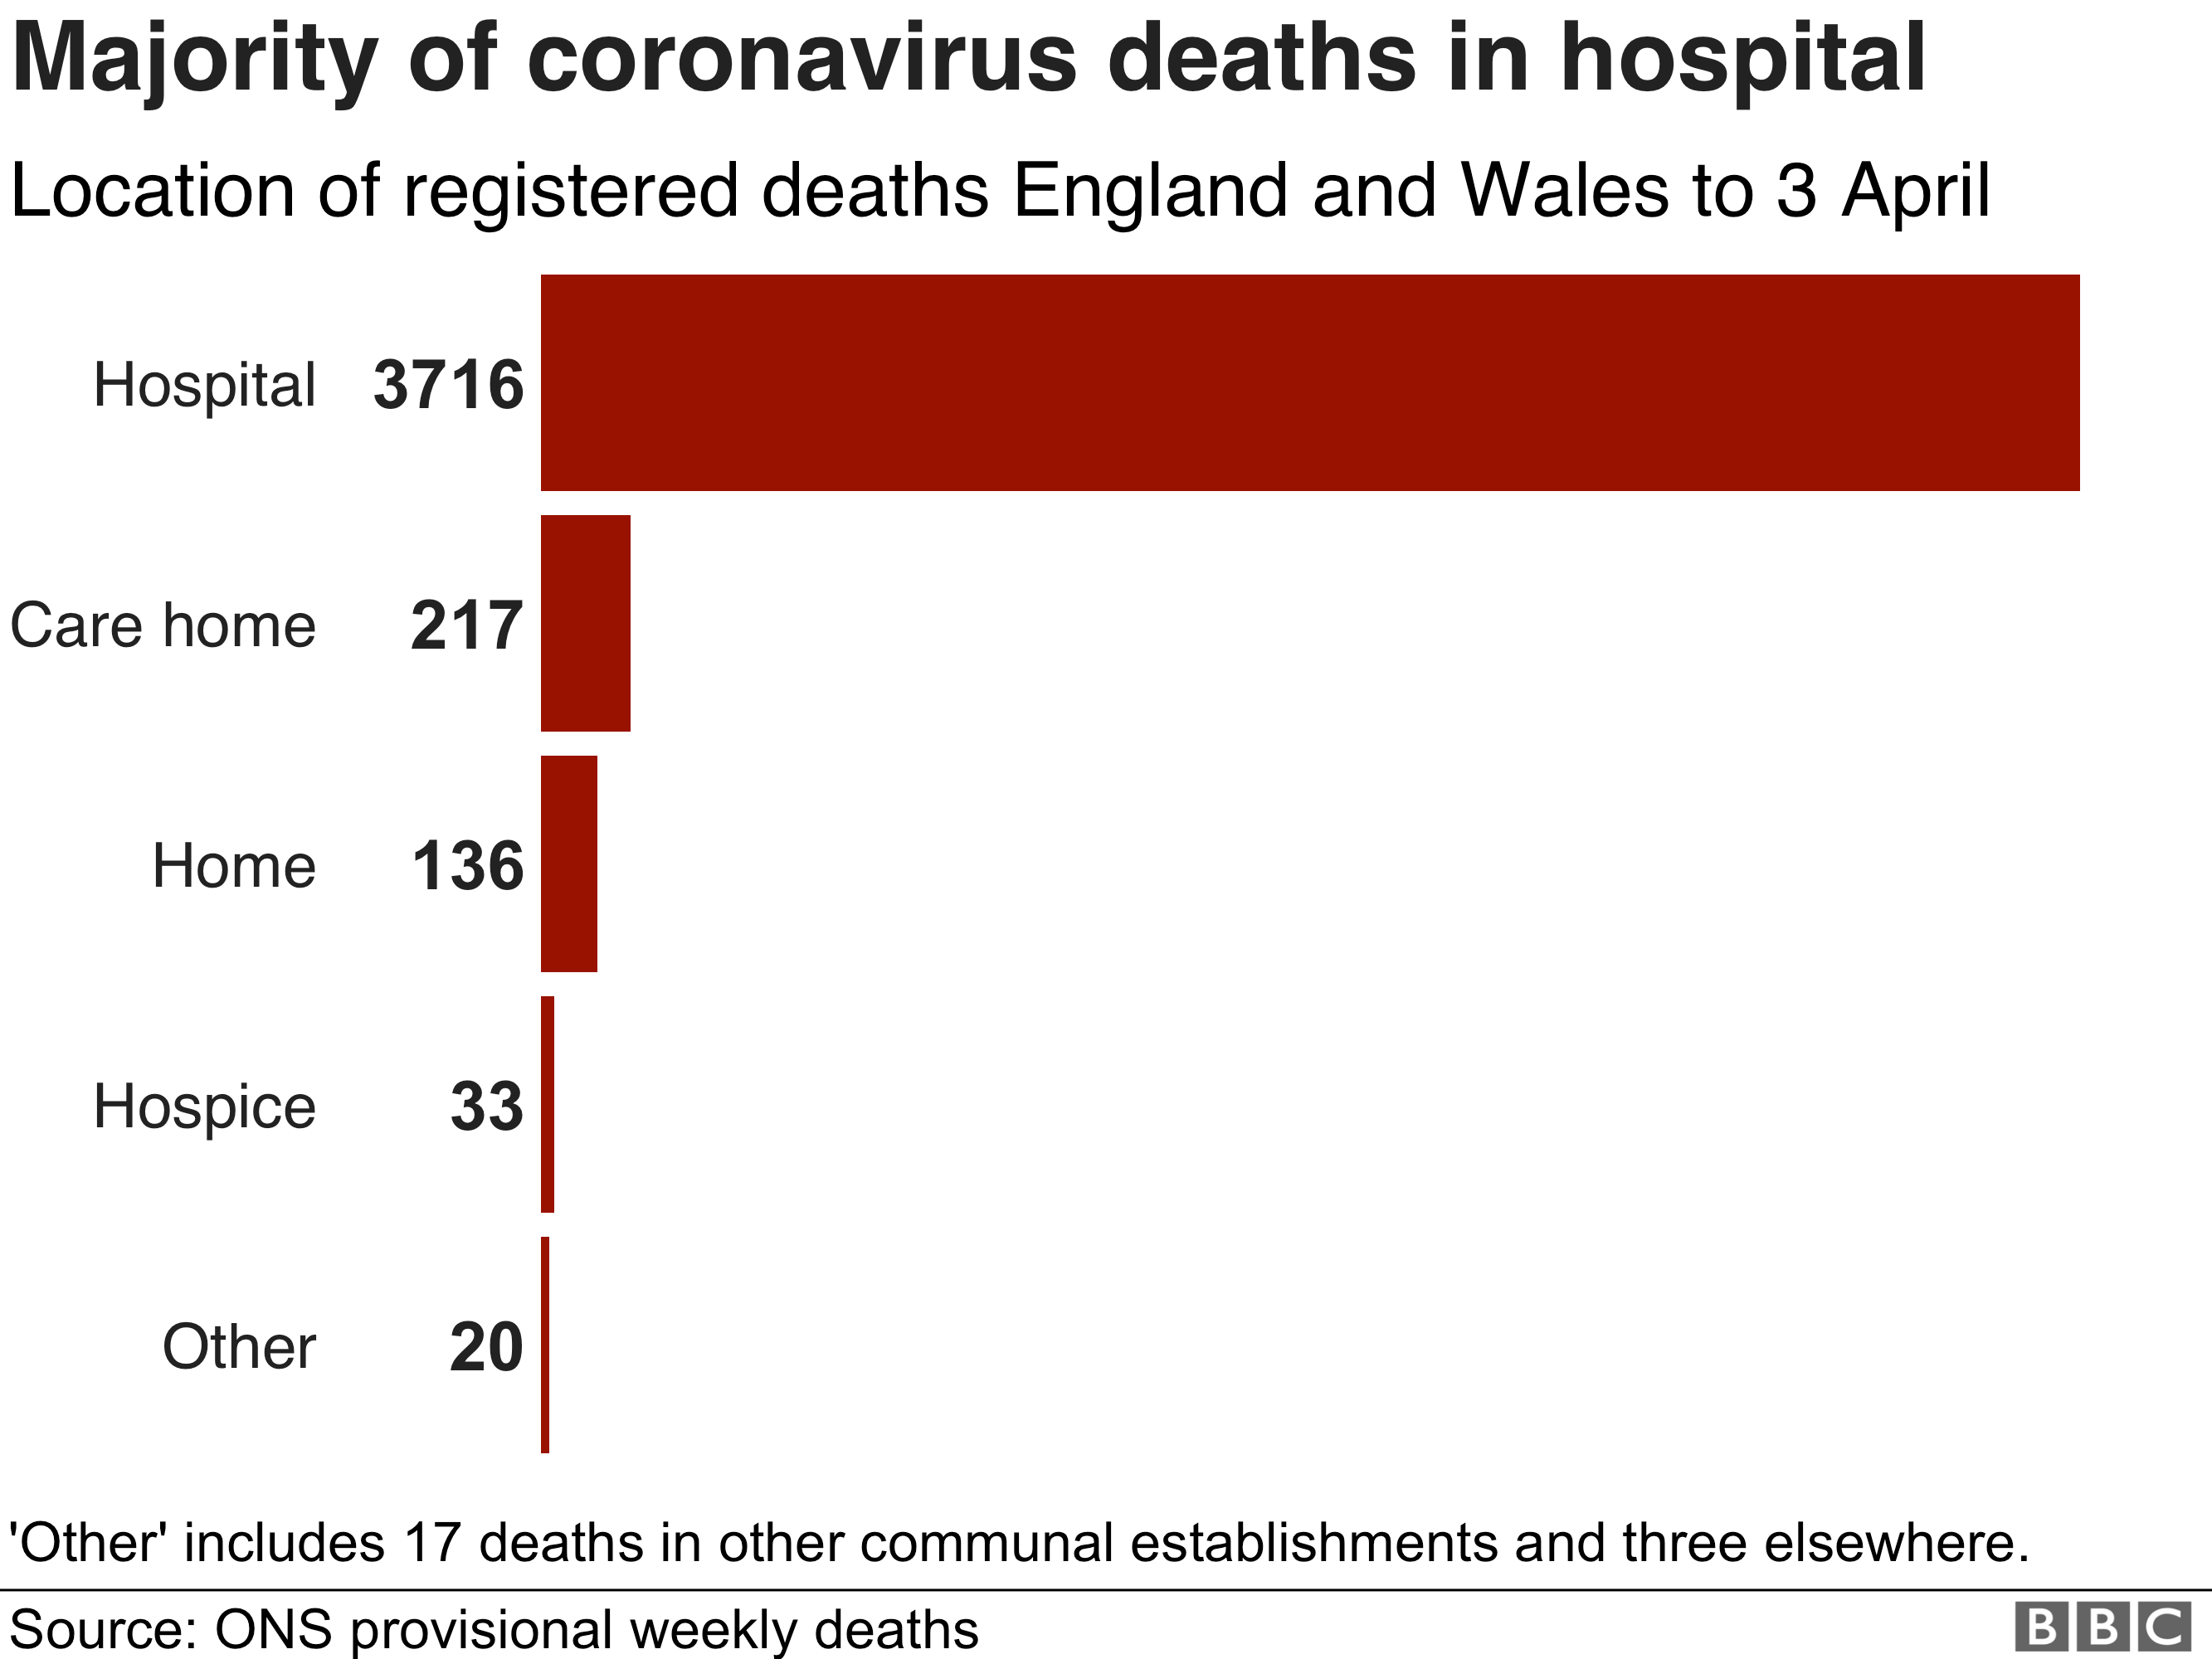 Location of coronavirus deaths